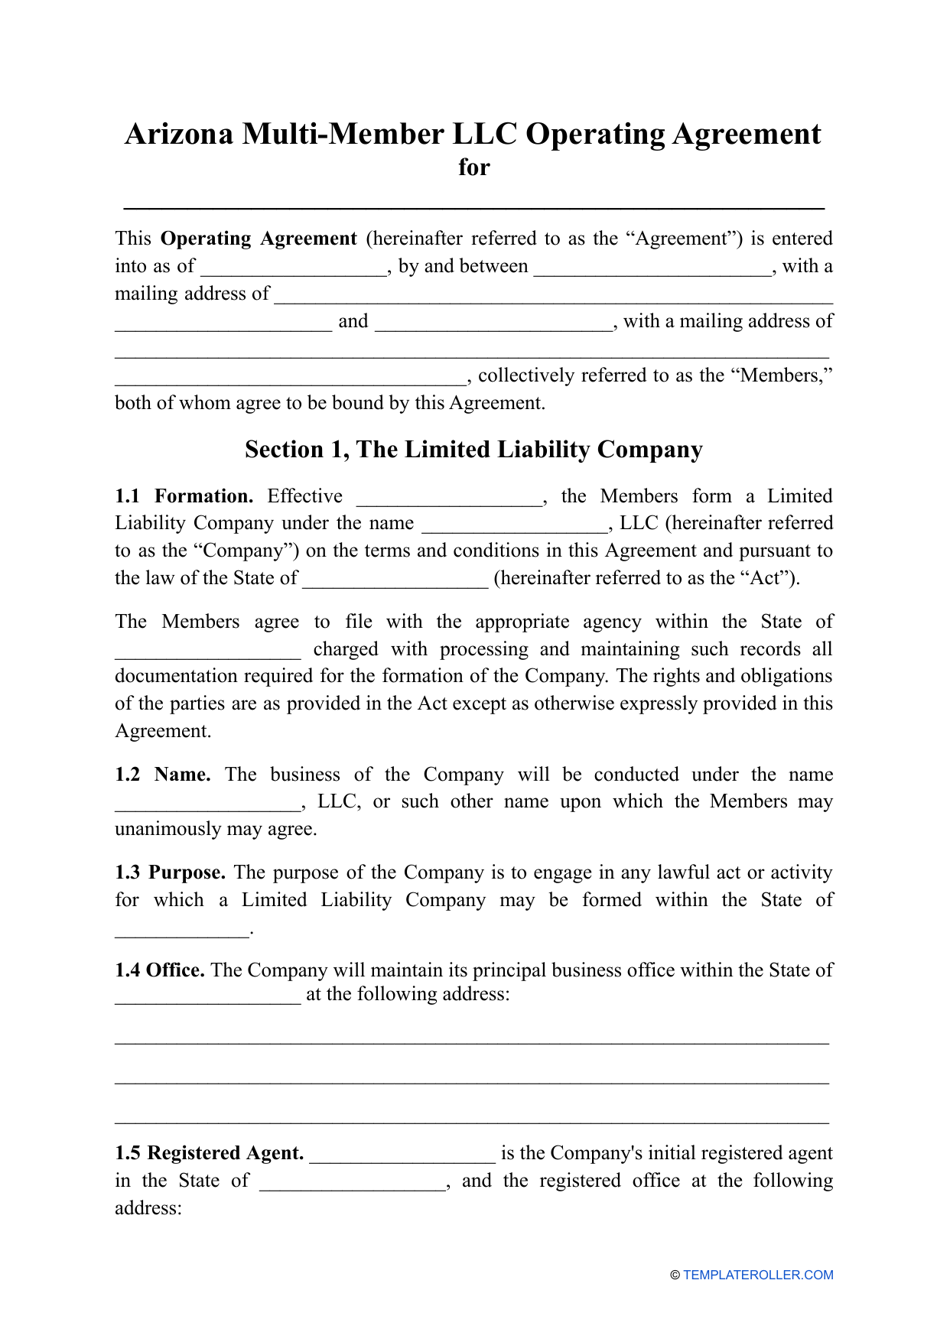 Multi-Member LLC Operating Agreement Template - Arizona, Page 1